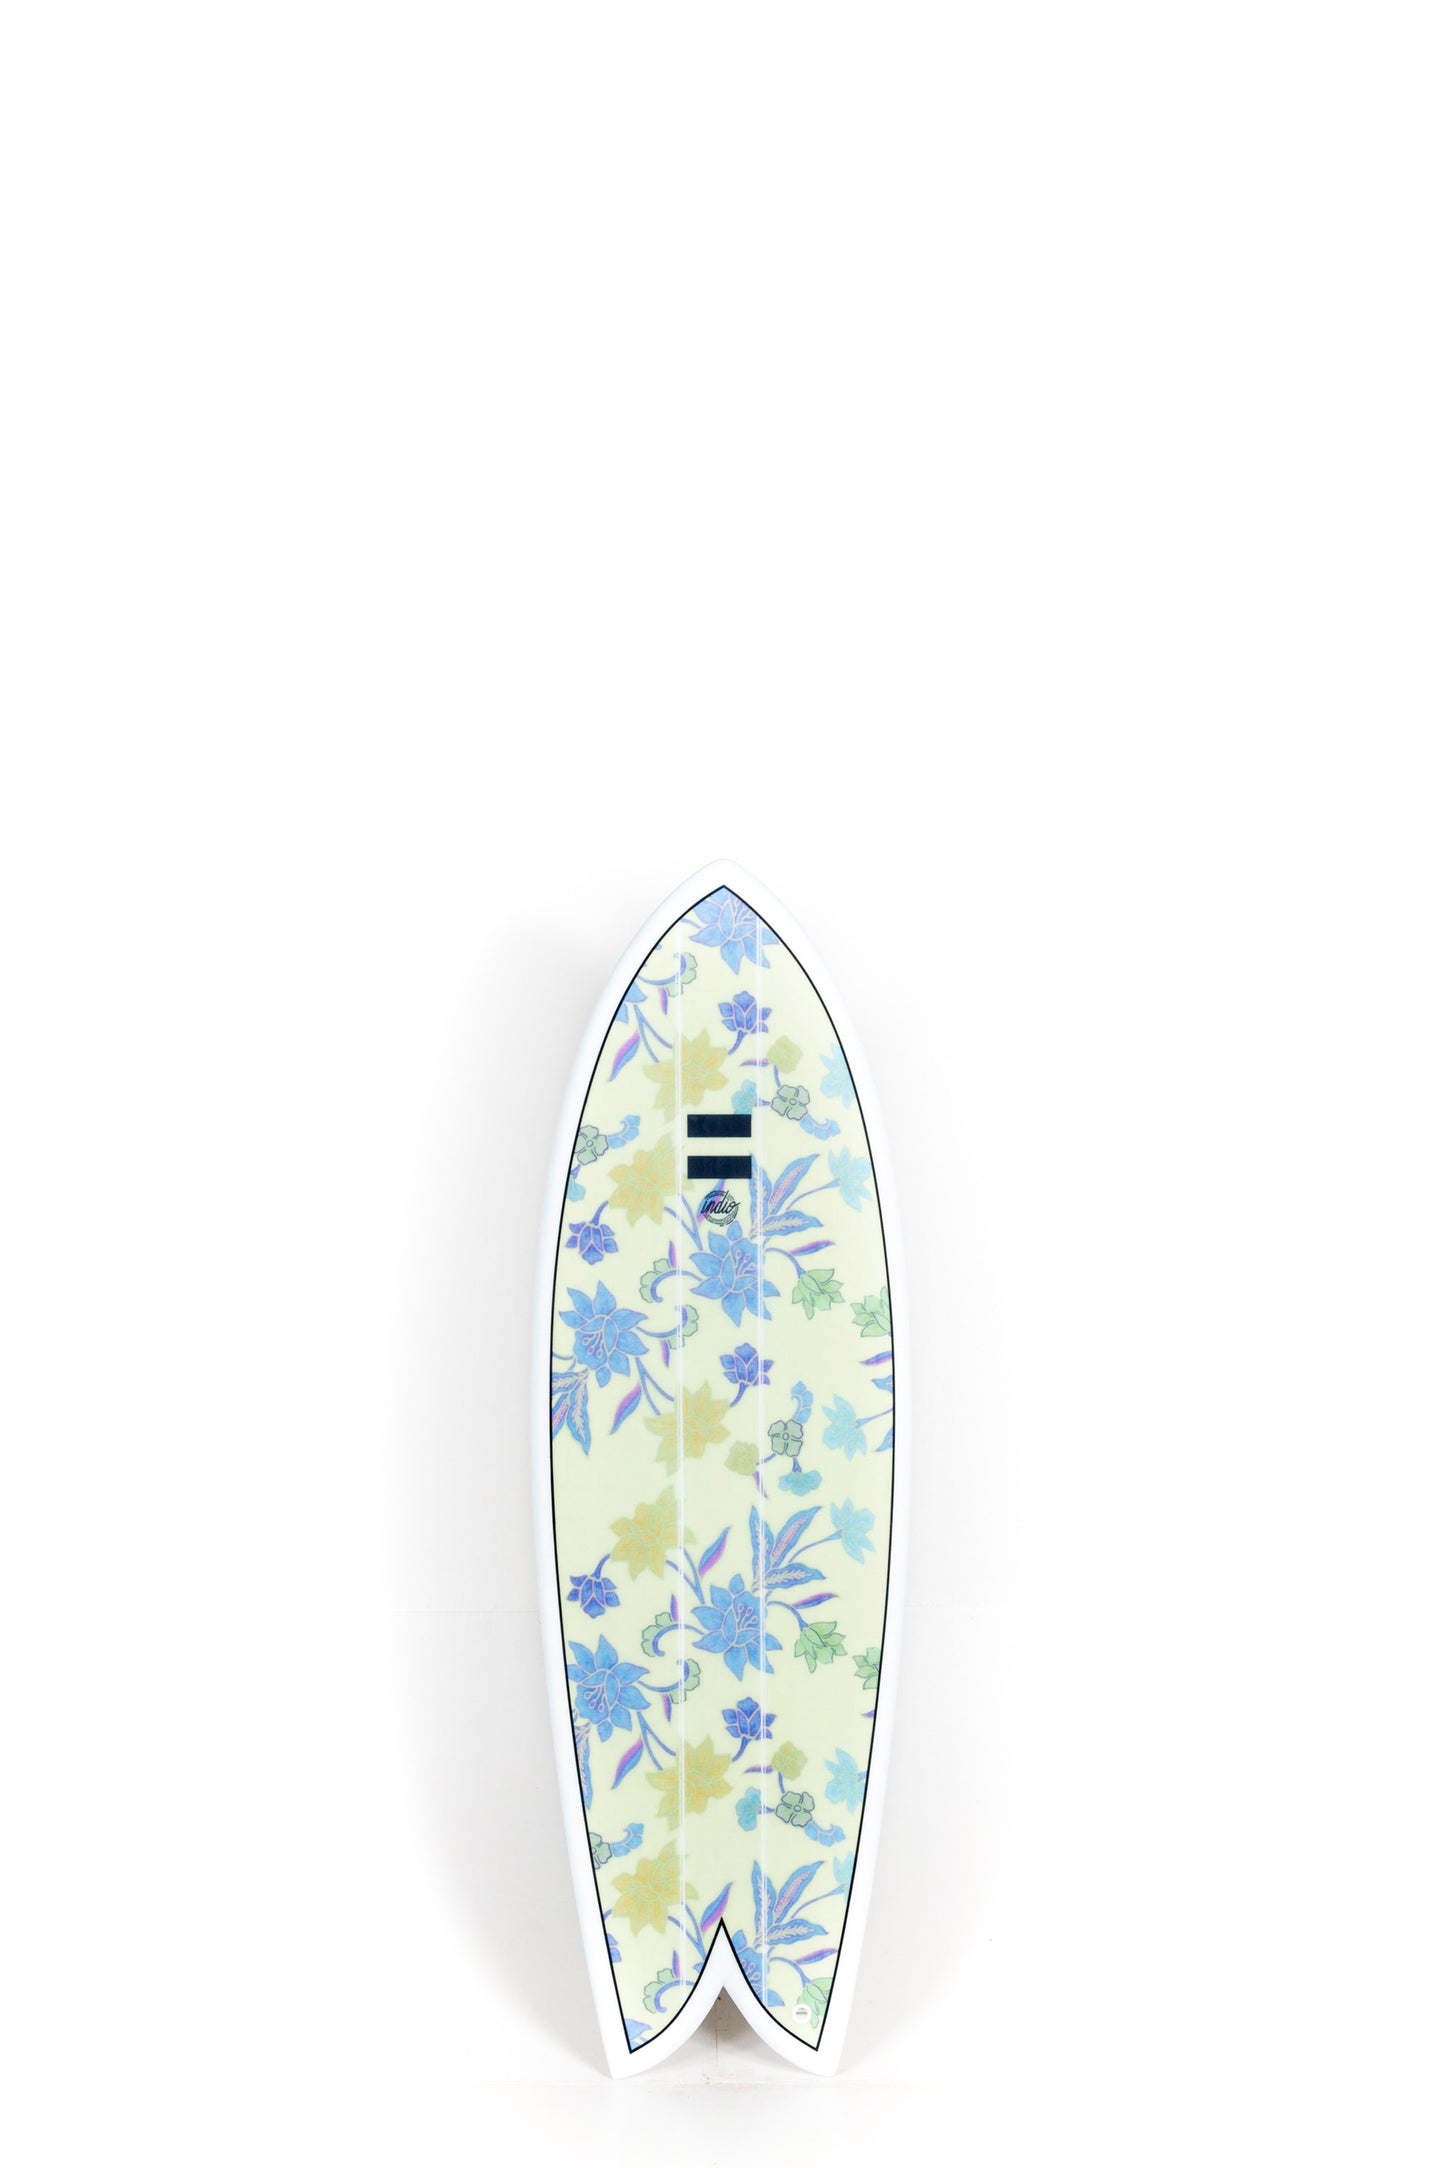 Pukas Surf Shop - Indio Surfboard - Endurance - DAB Flowers